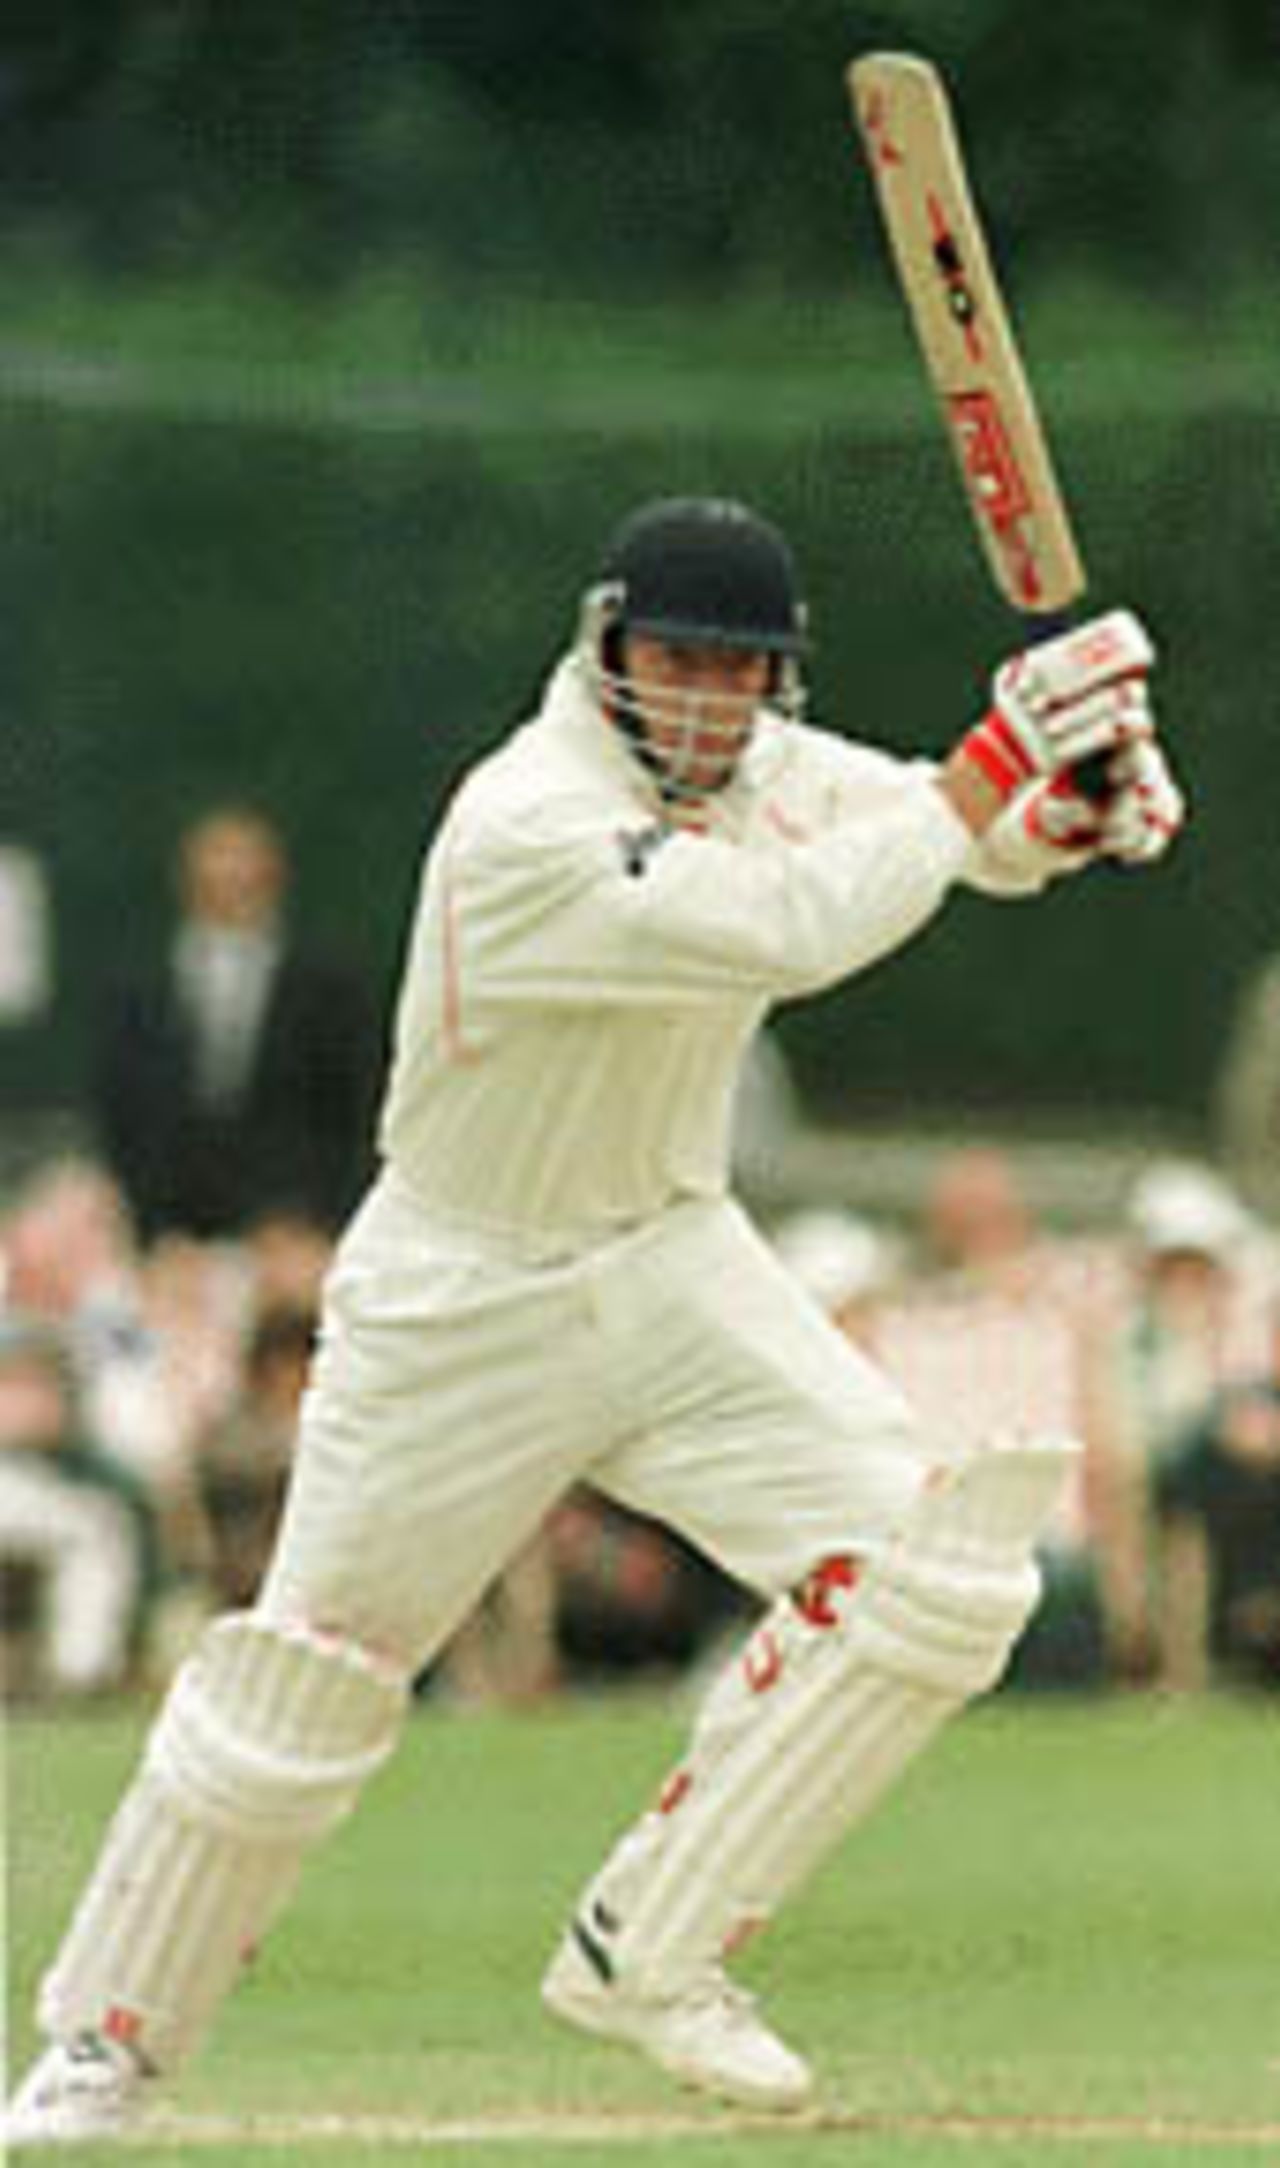 Mike Watkinson in batting action, Lancashire v Warwickshire, County Championship, 09-12 June 1999